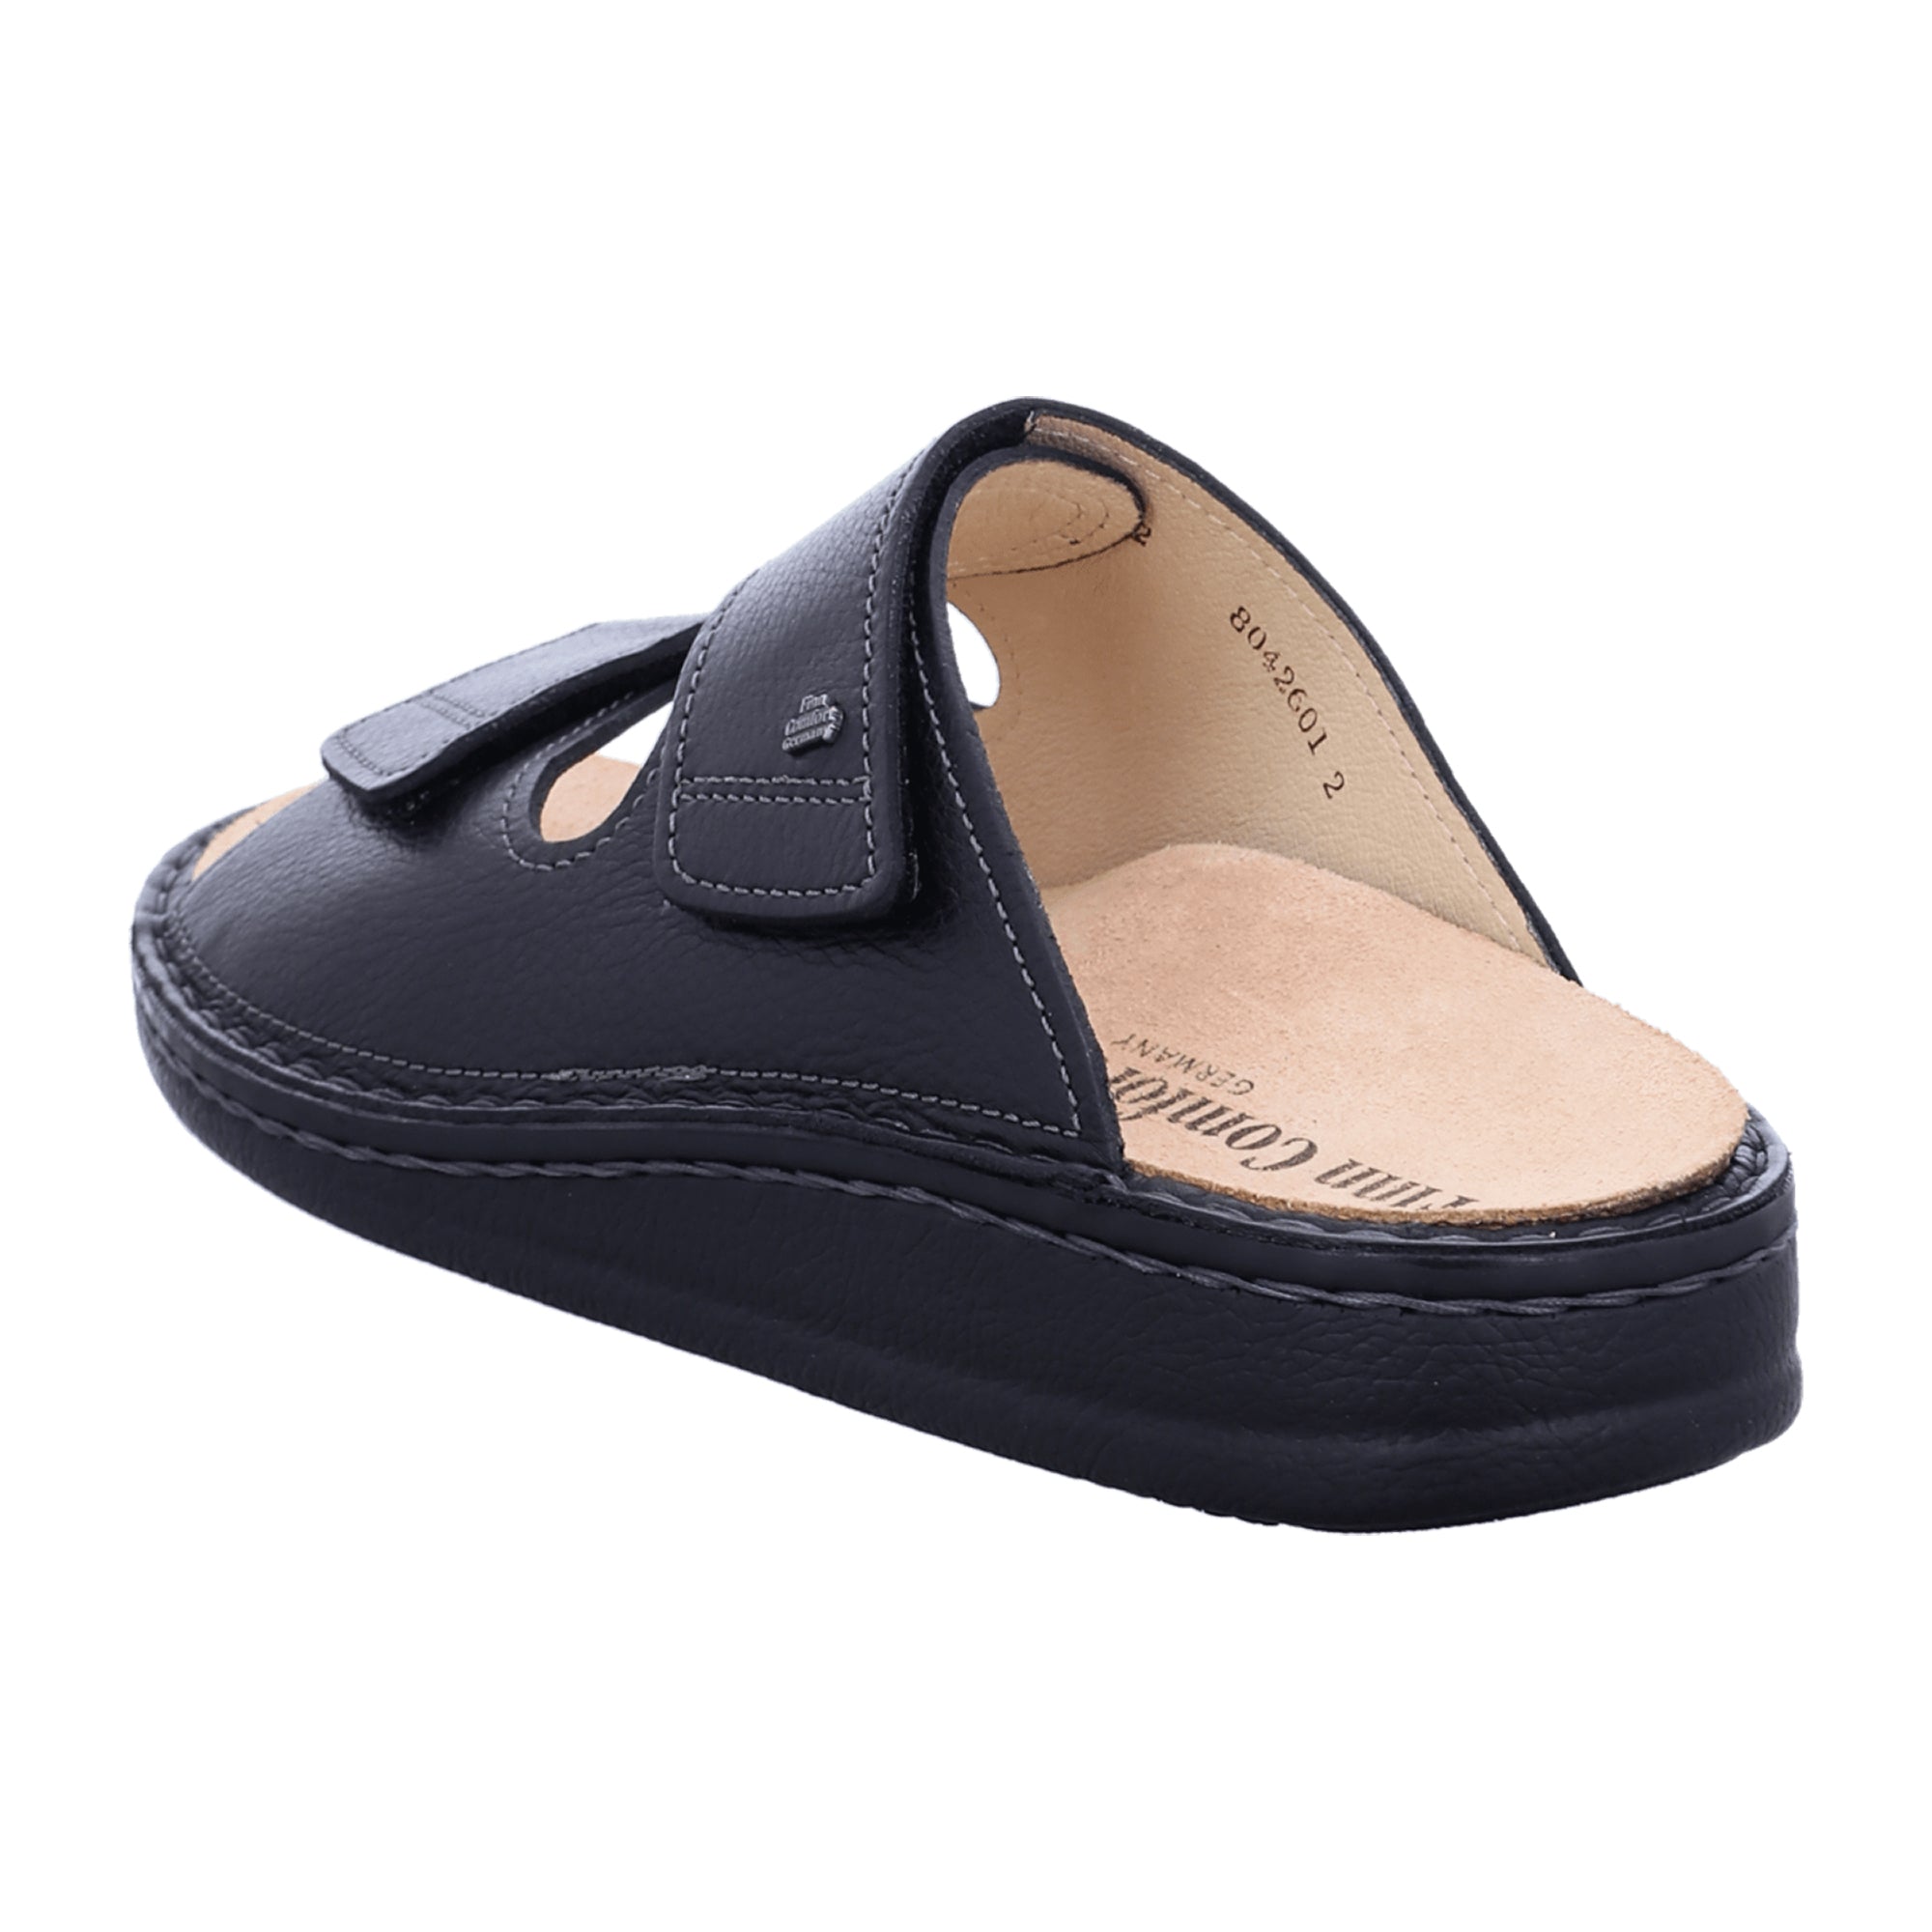 Finn Comfort Men's Black Comfort Shoes 1505-676393 | Stylish & Durable